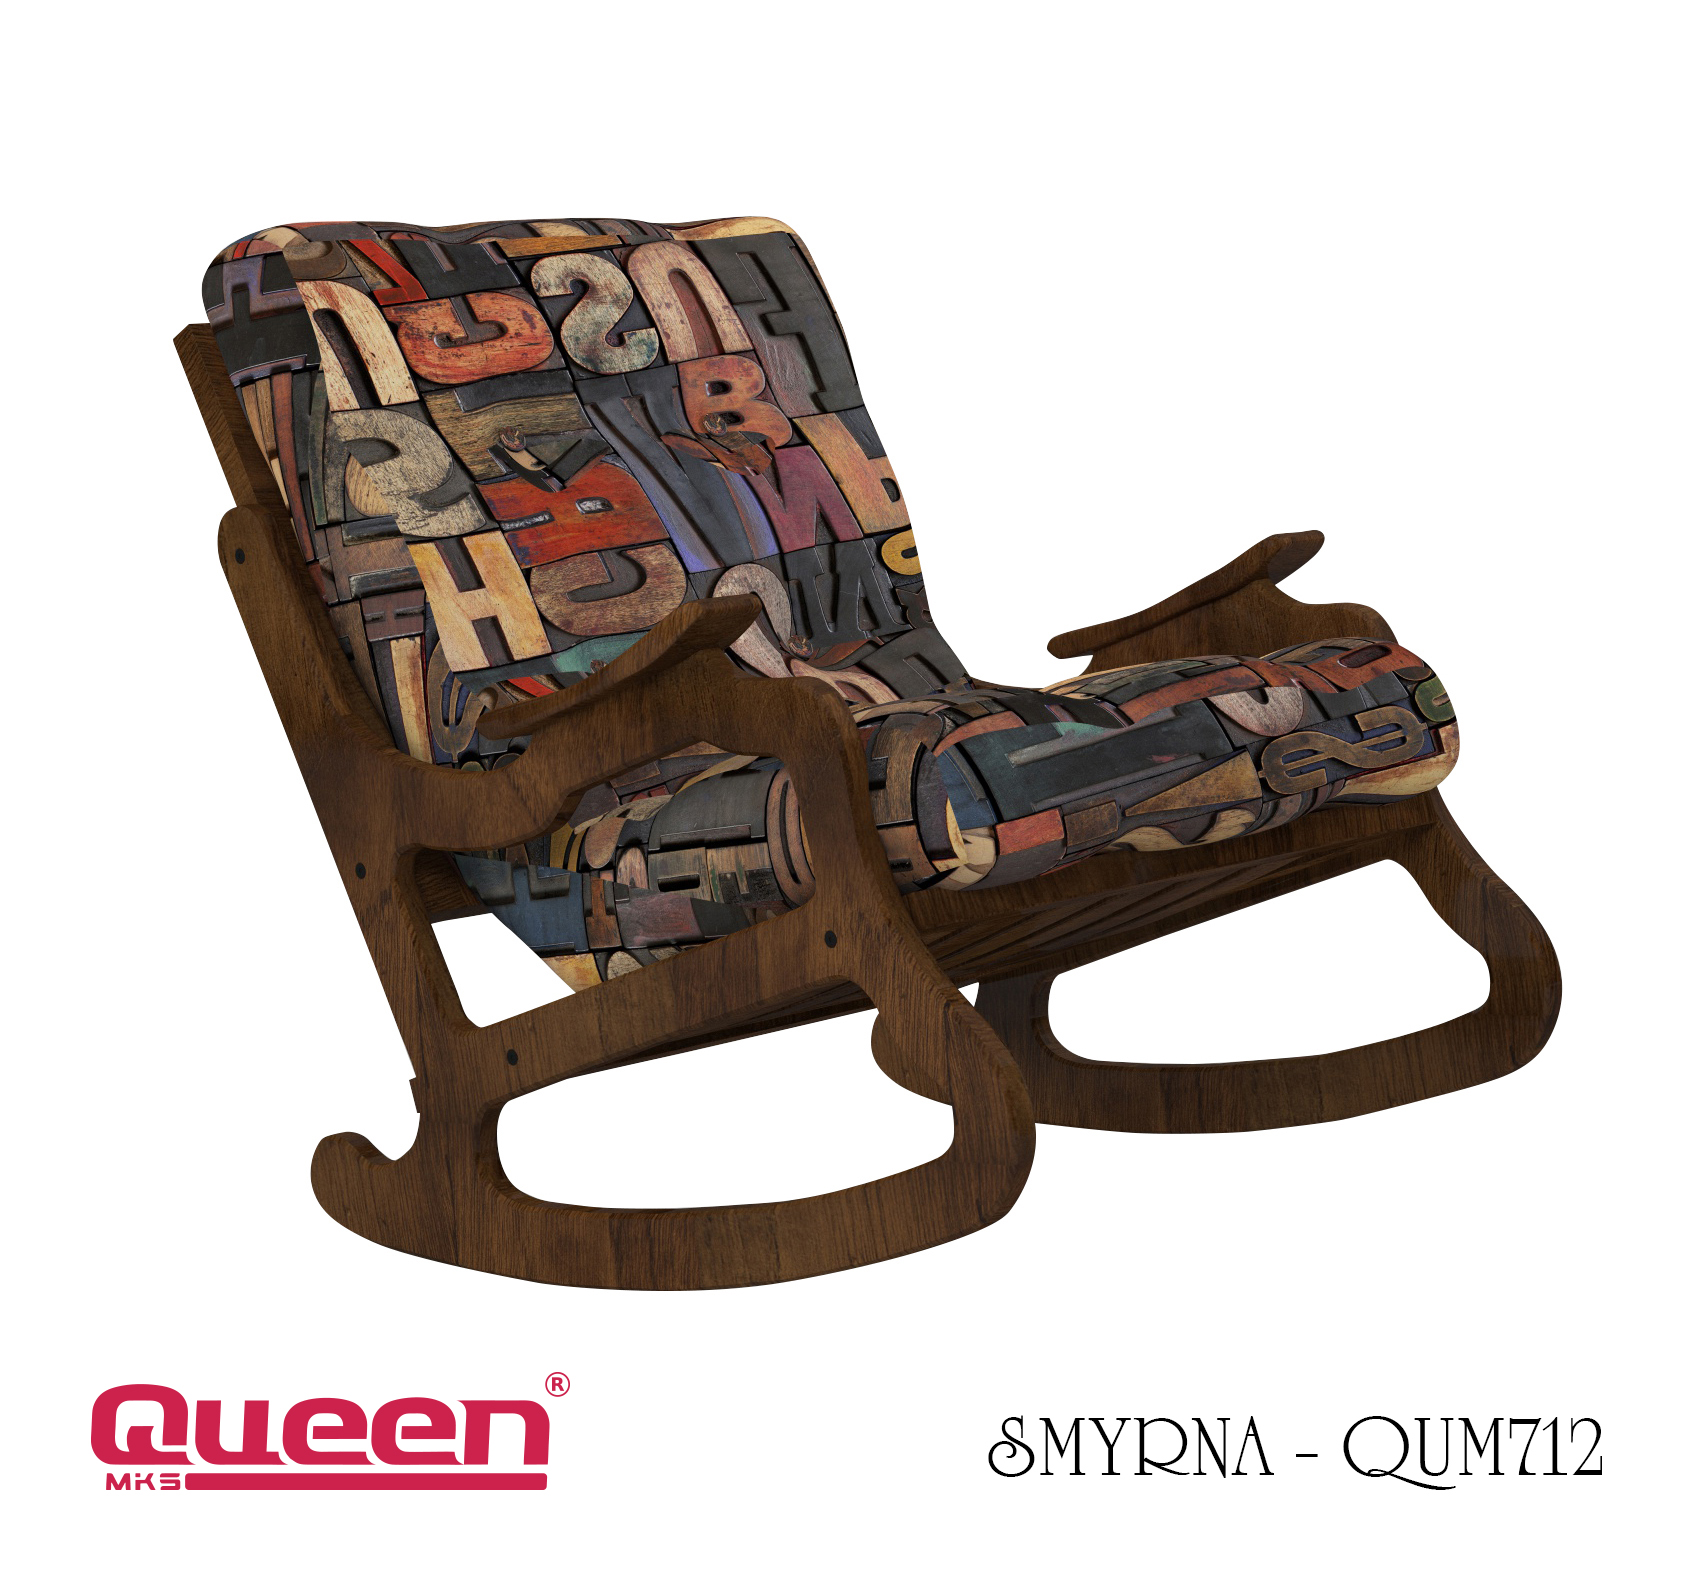 Queen SMYRNA QUM712 Bahçe Sallanan Koltuk Set Mobilya, Yıl Başı